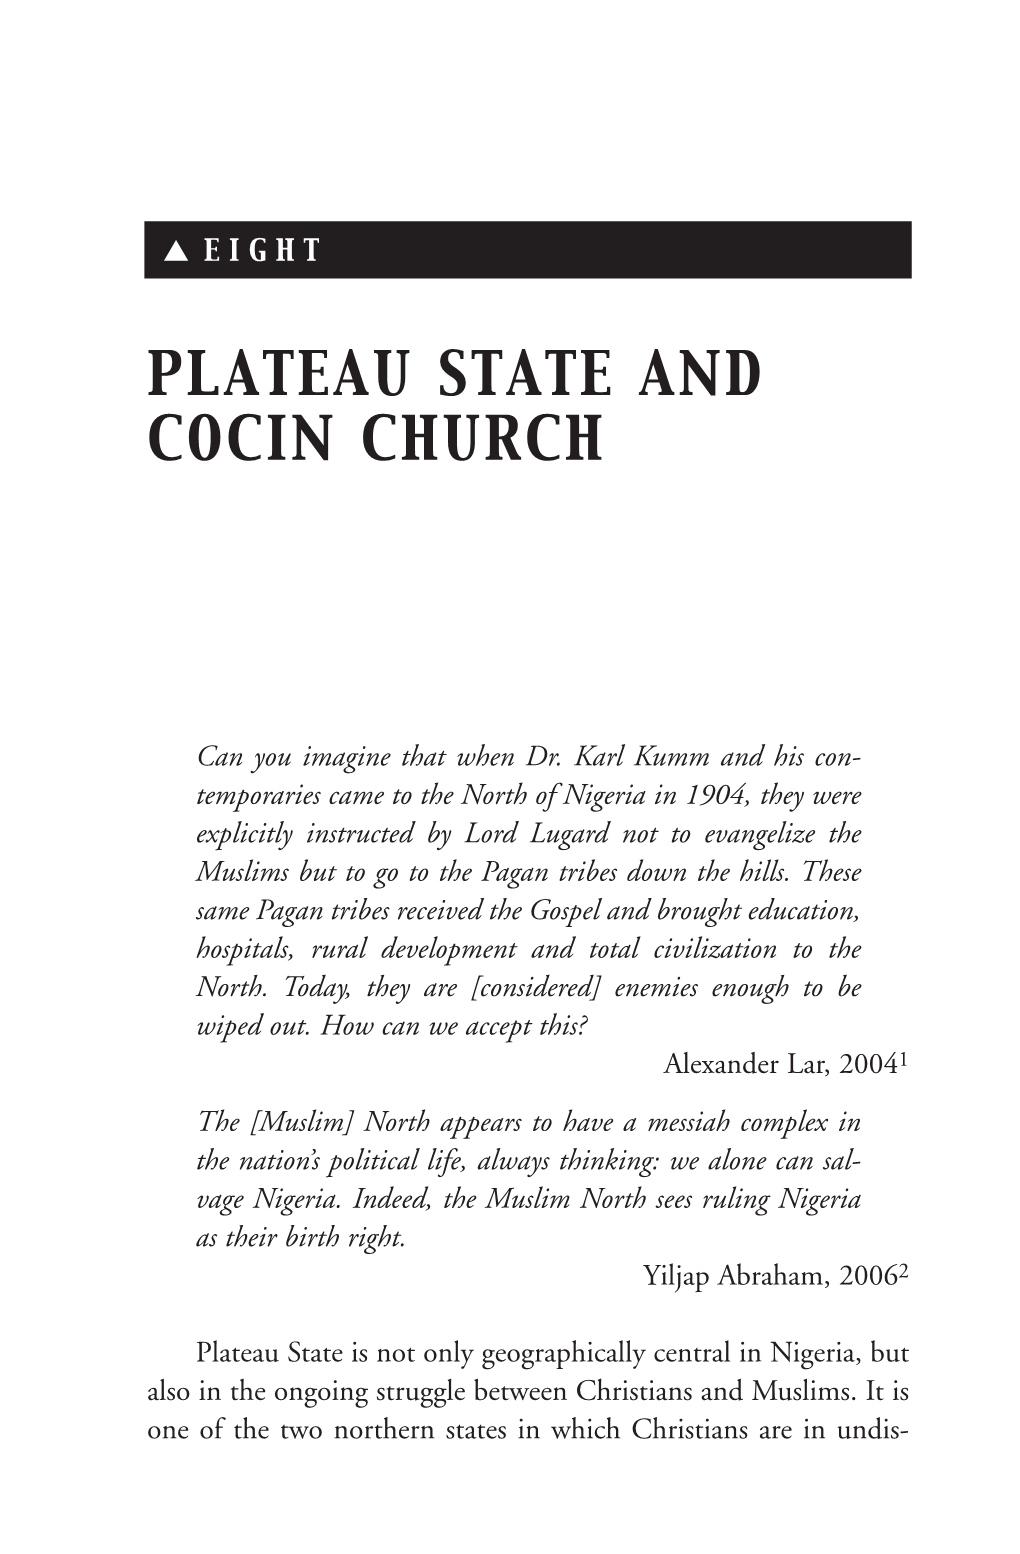 Plateau State and Cocin Church